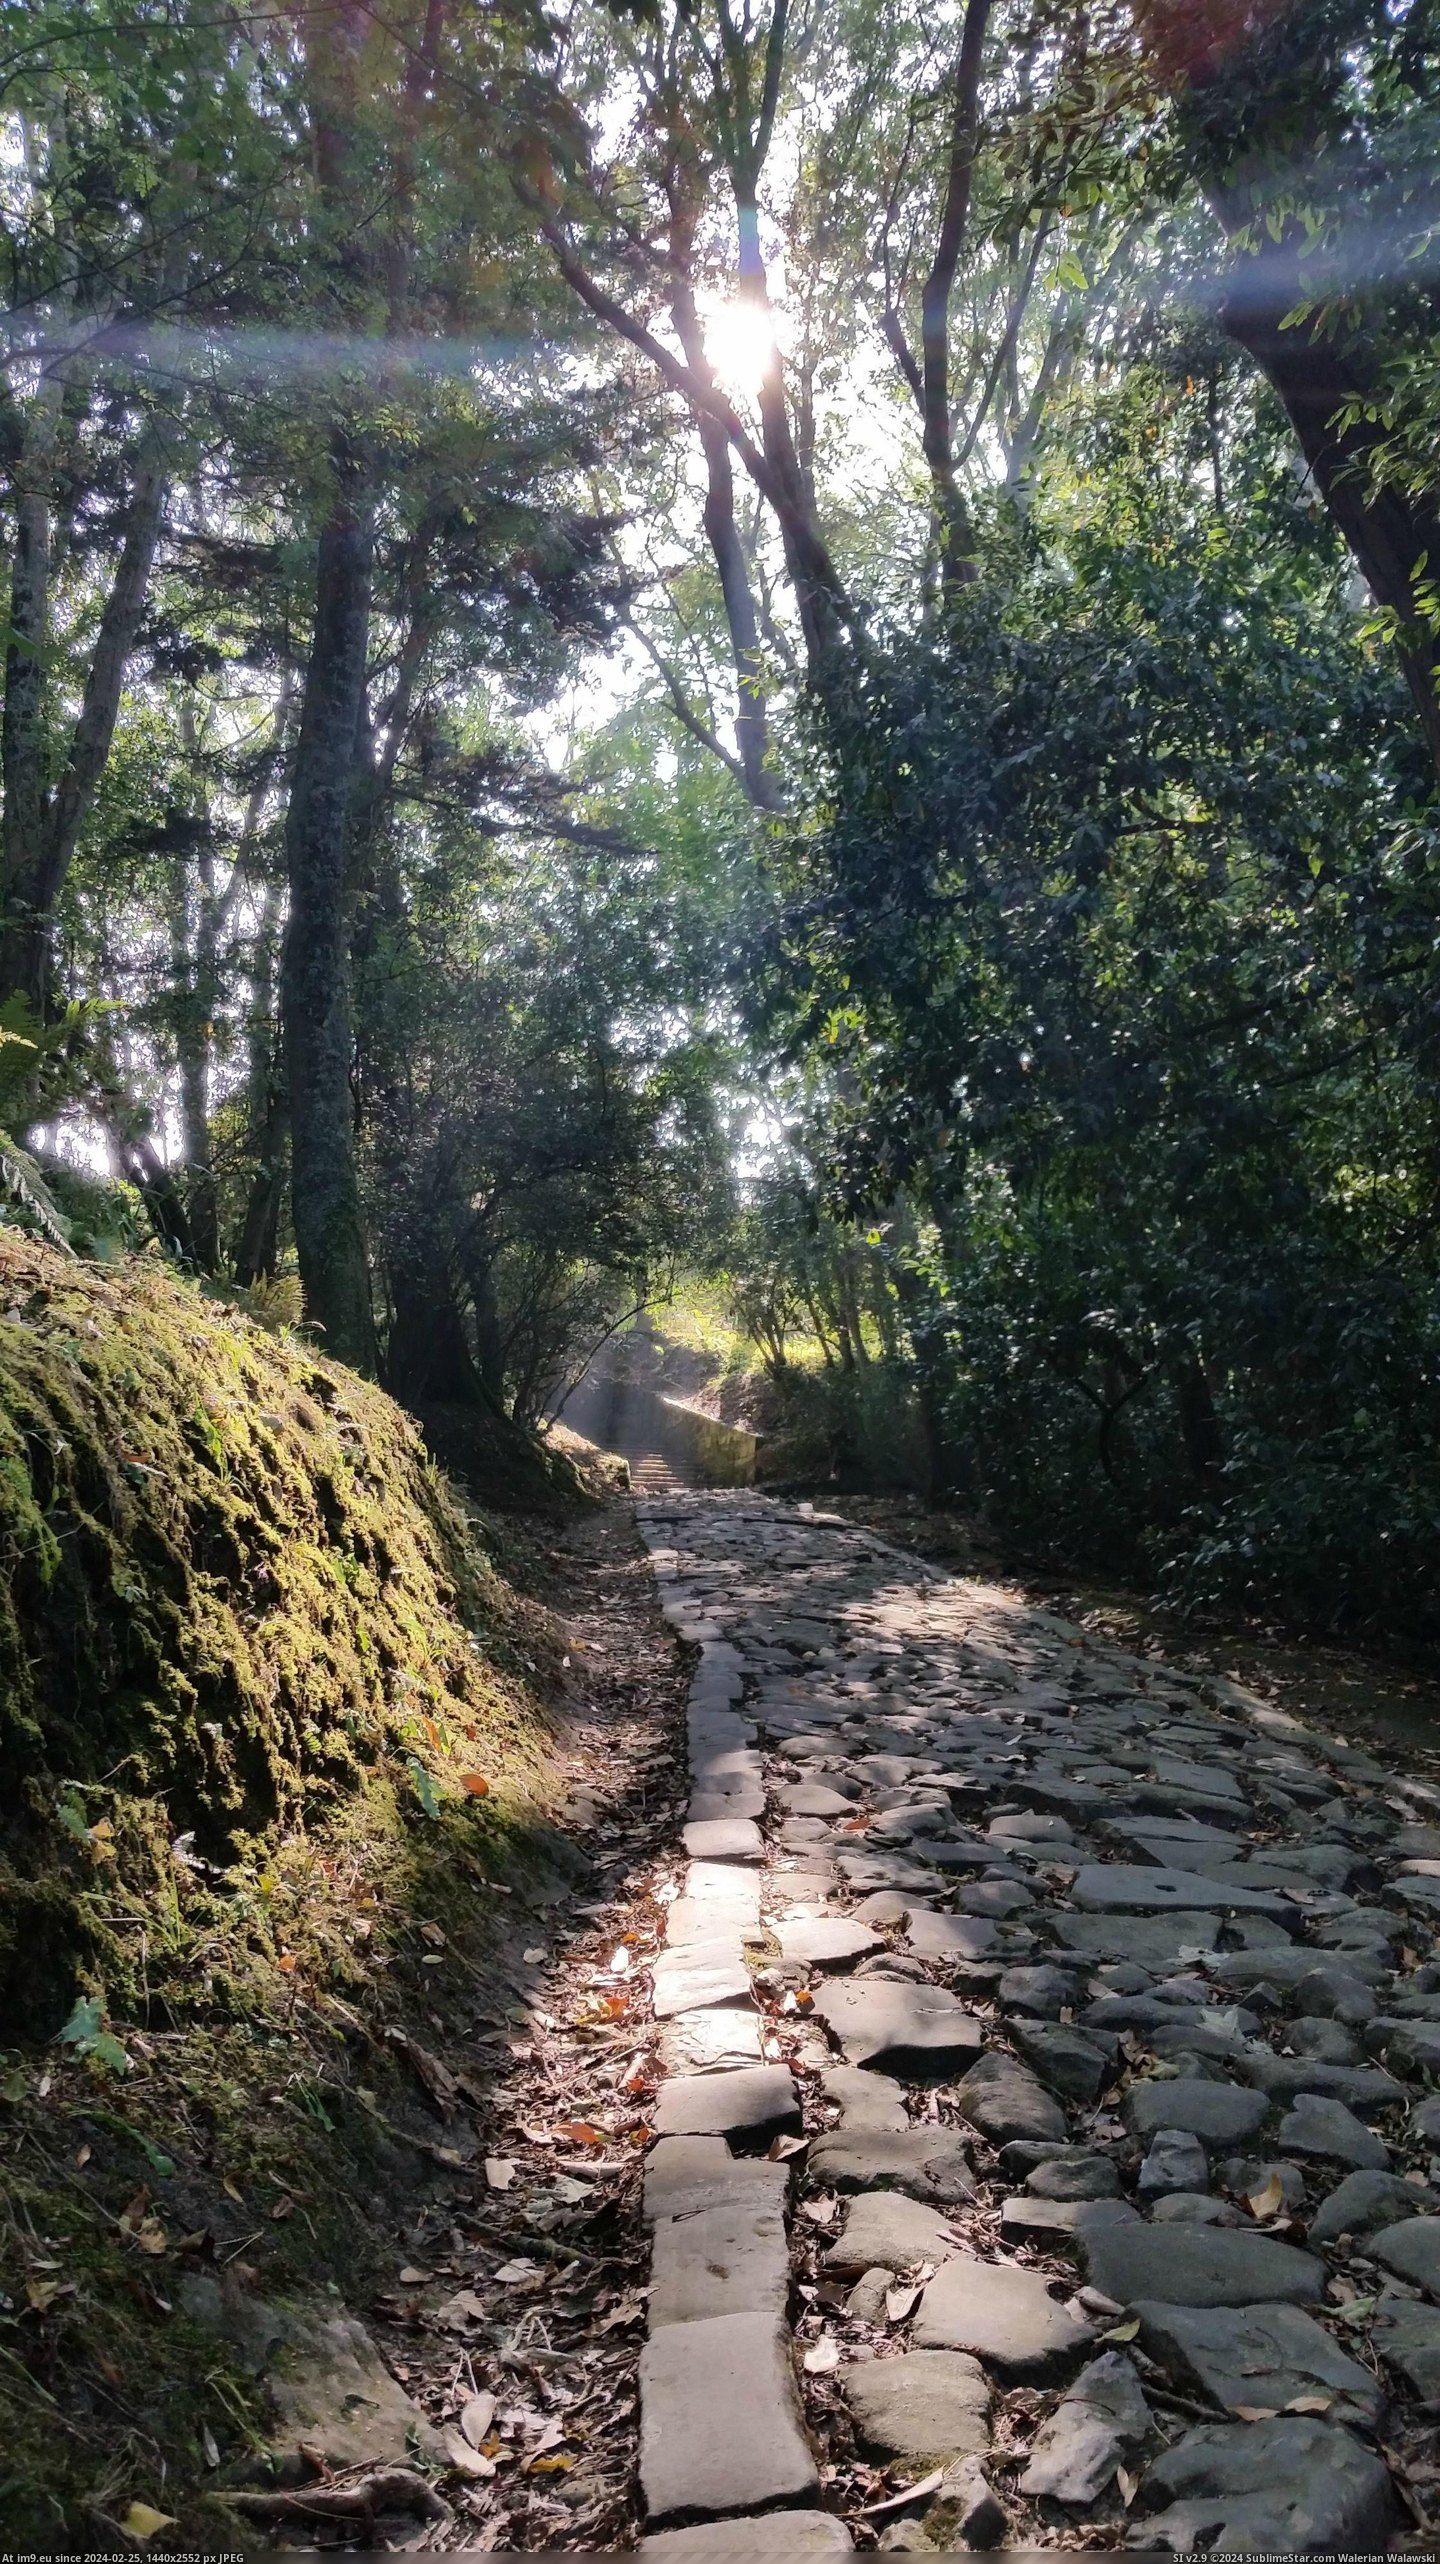 #Hope #San #Foot #Path #Rules #Sebastian #Sub #Spain #Fits [Earthporn] San Sebastian, Spain foot path [OC] [5312 x 2988] - hope it fits the Sub rules! Pic. (Bild von album My r/EARTHPORN favs))